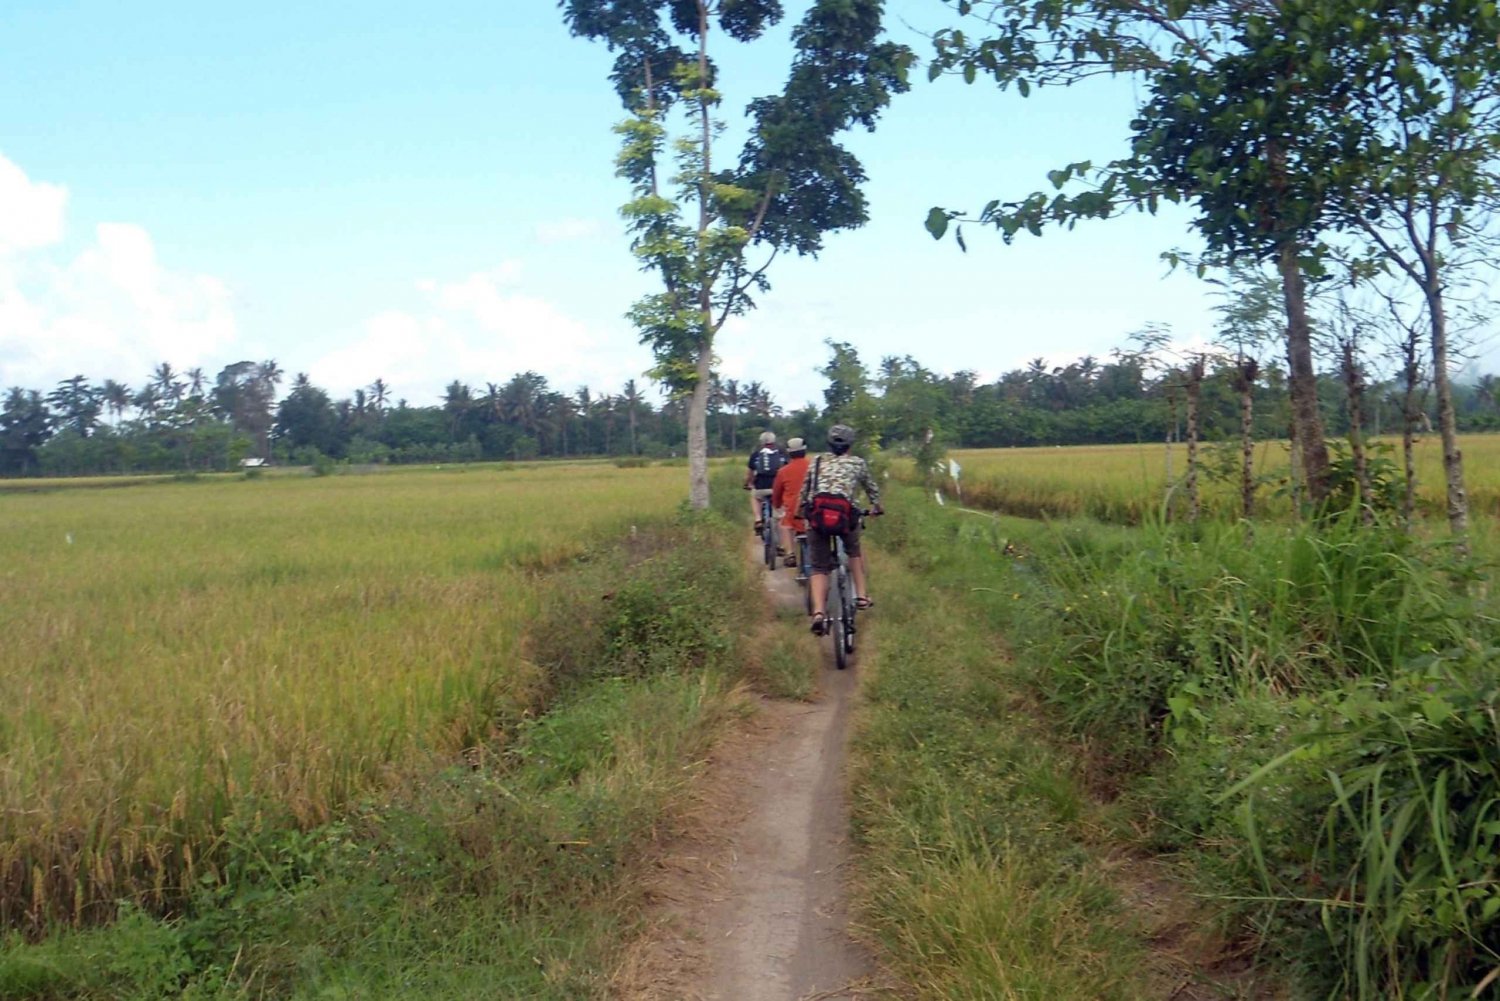 Passeio de bicicleta pelo campo até a vila de Golong e o templo de Lingsar